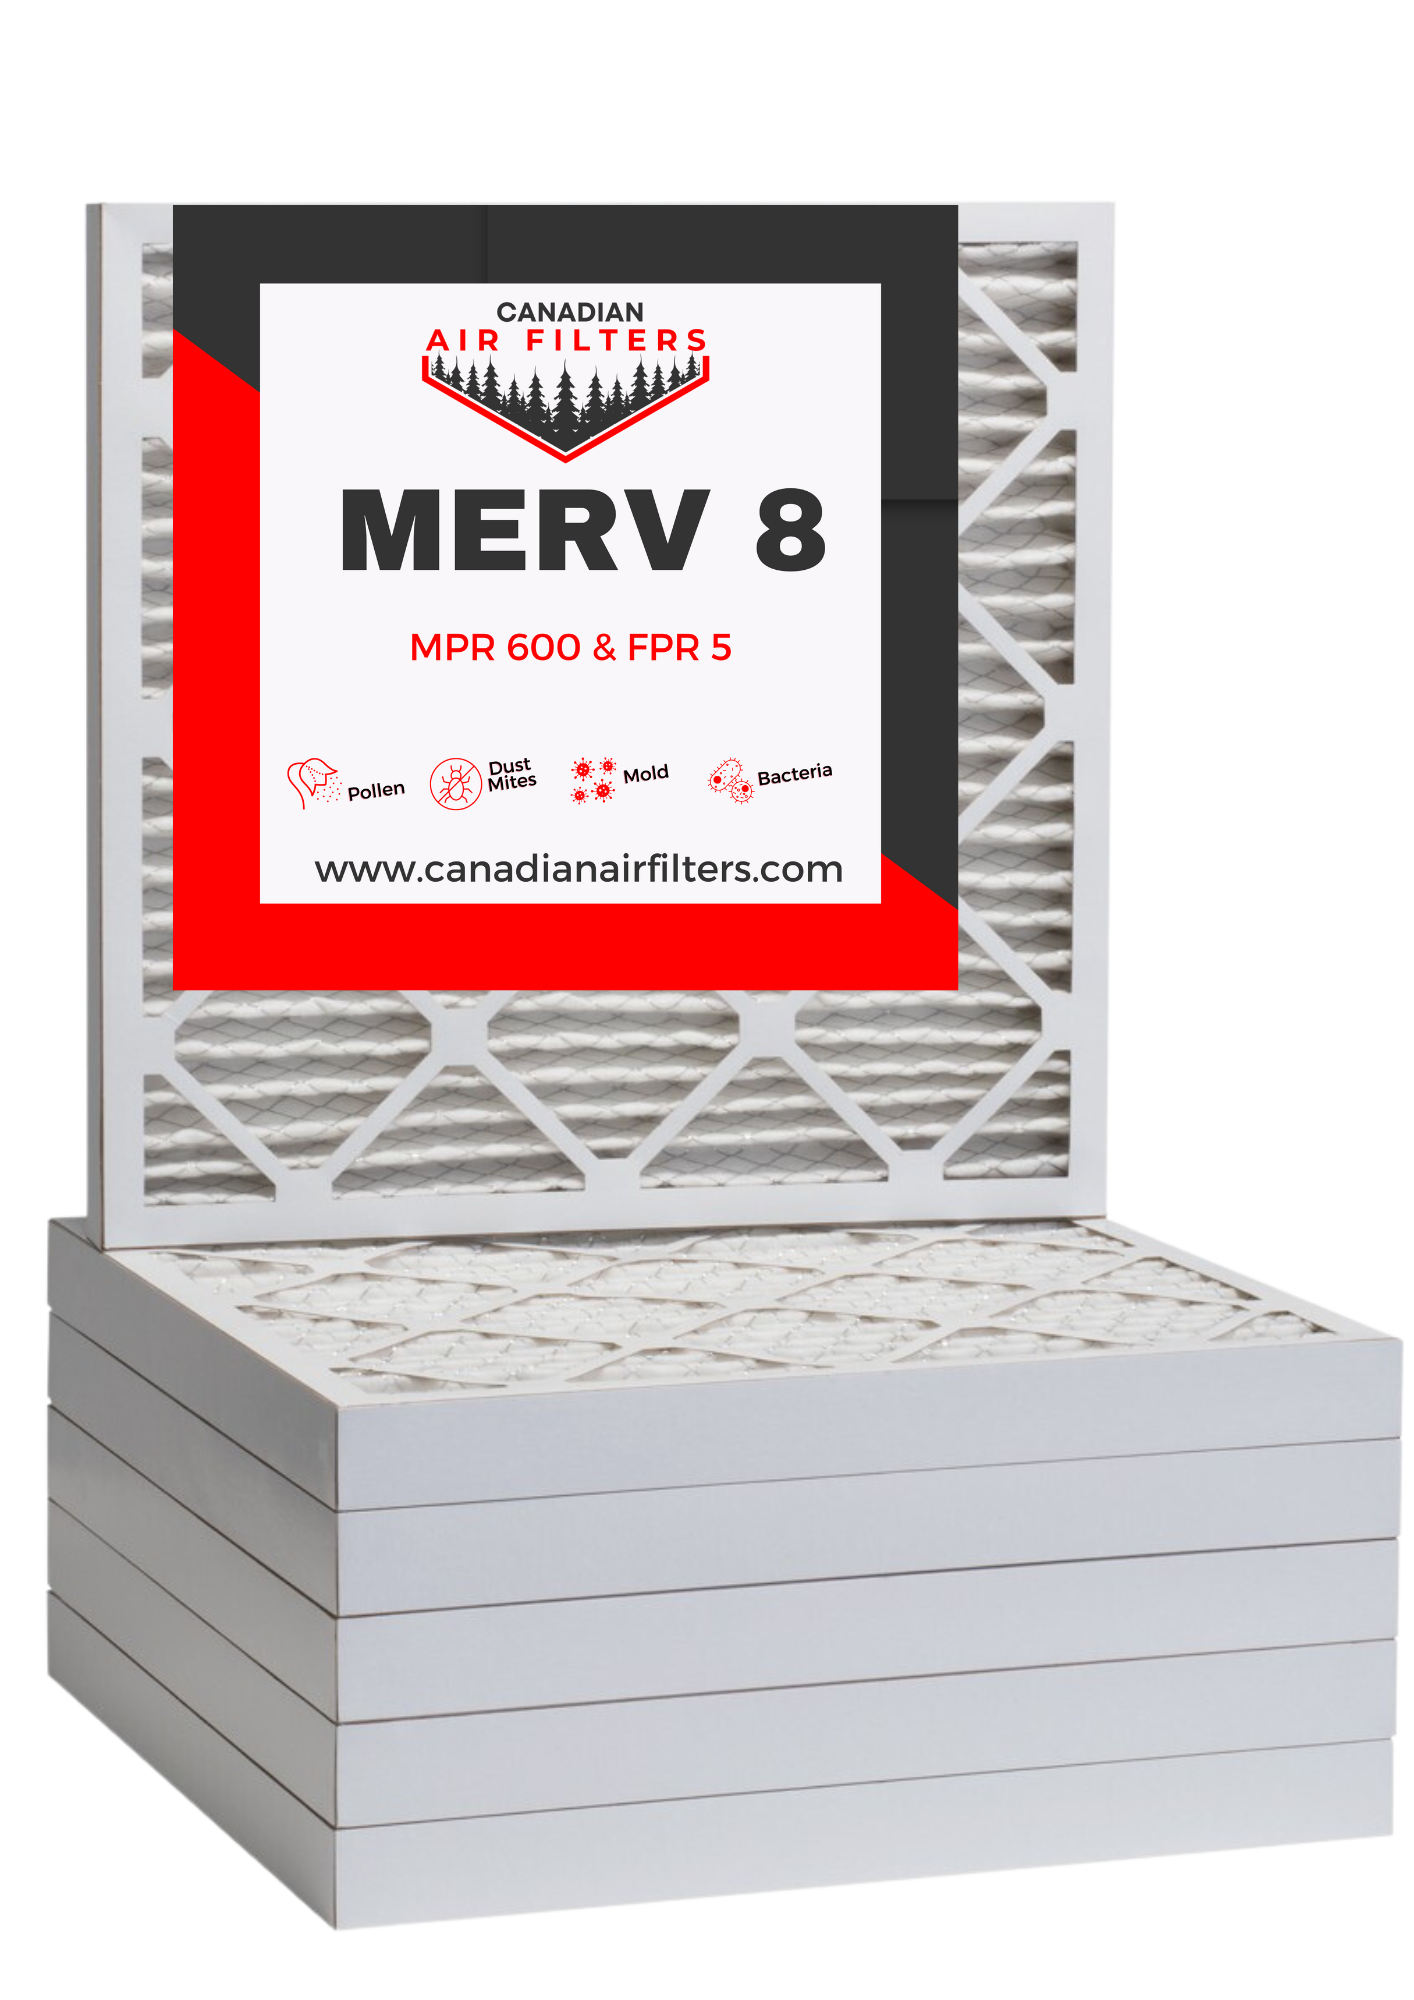 22x 26 x 1 MERV 8 Pleated Air Filter (06 pack)